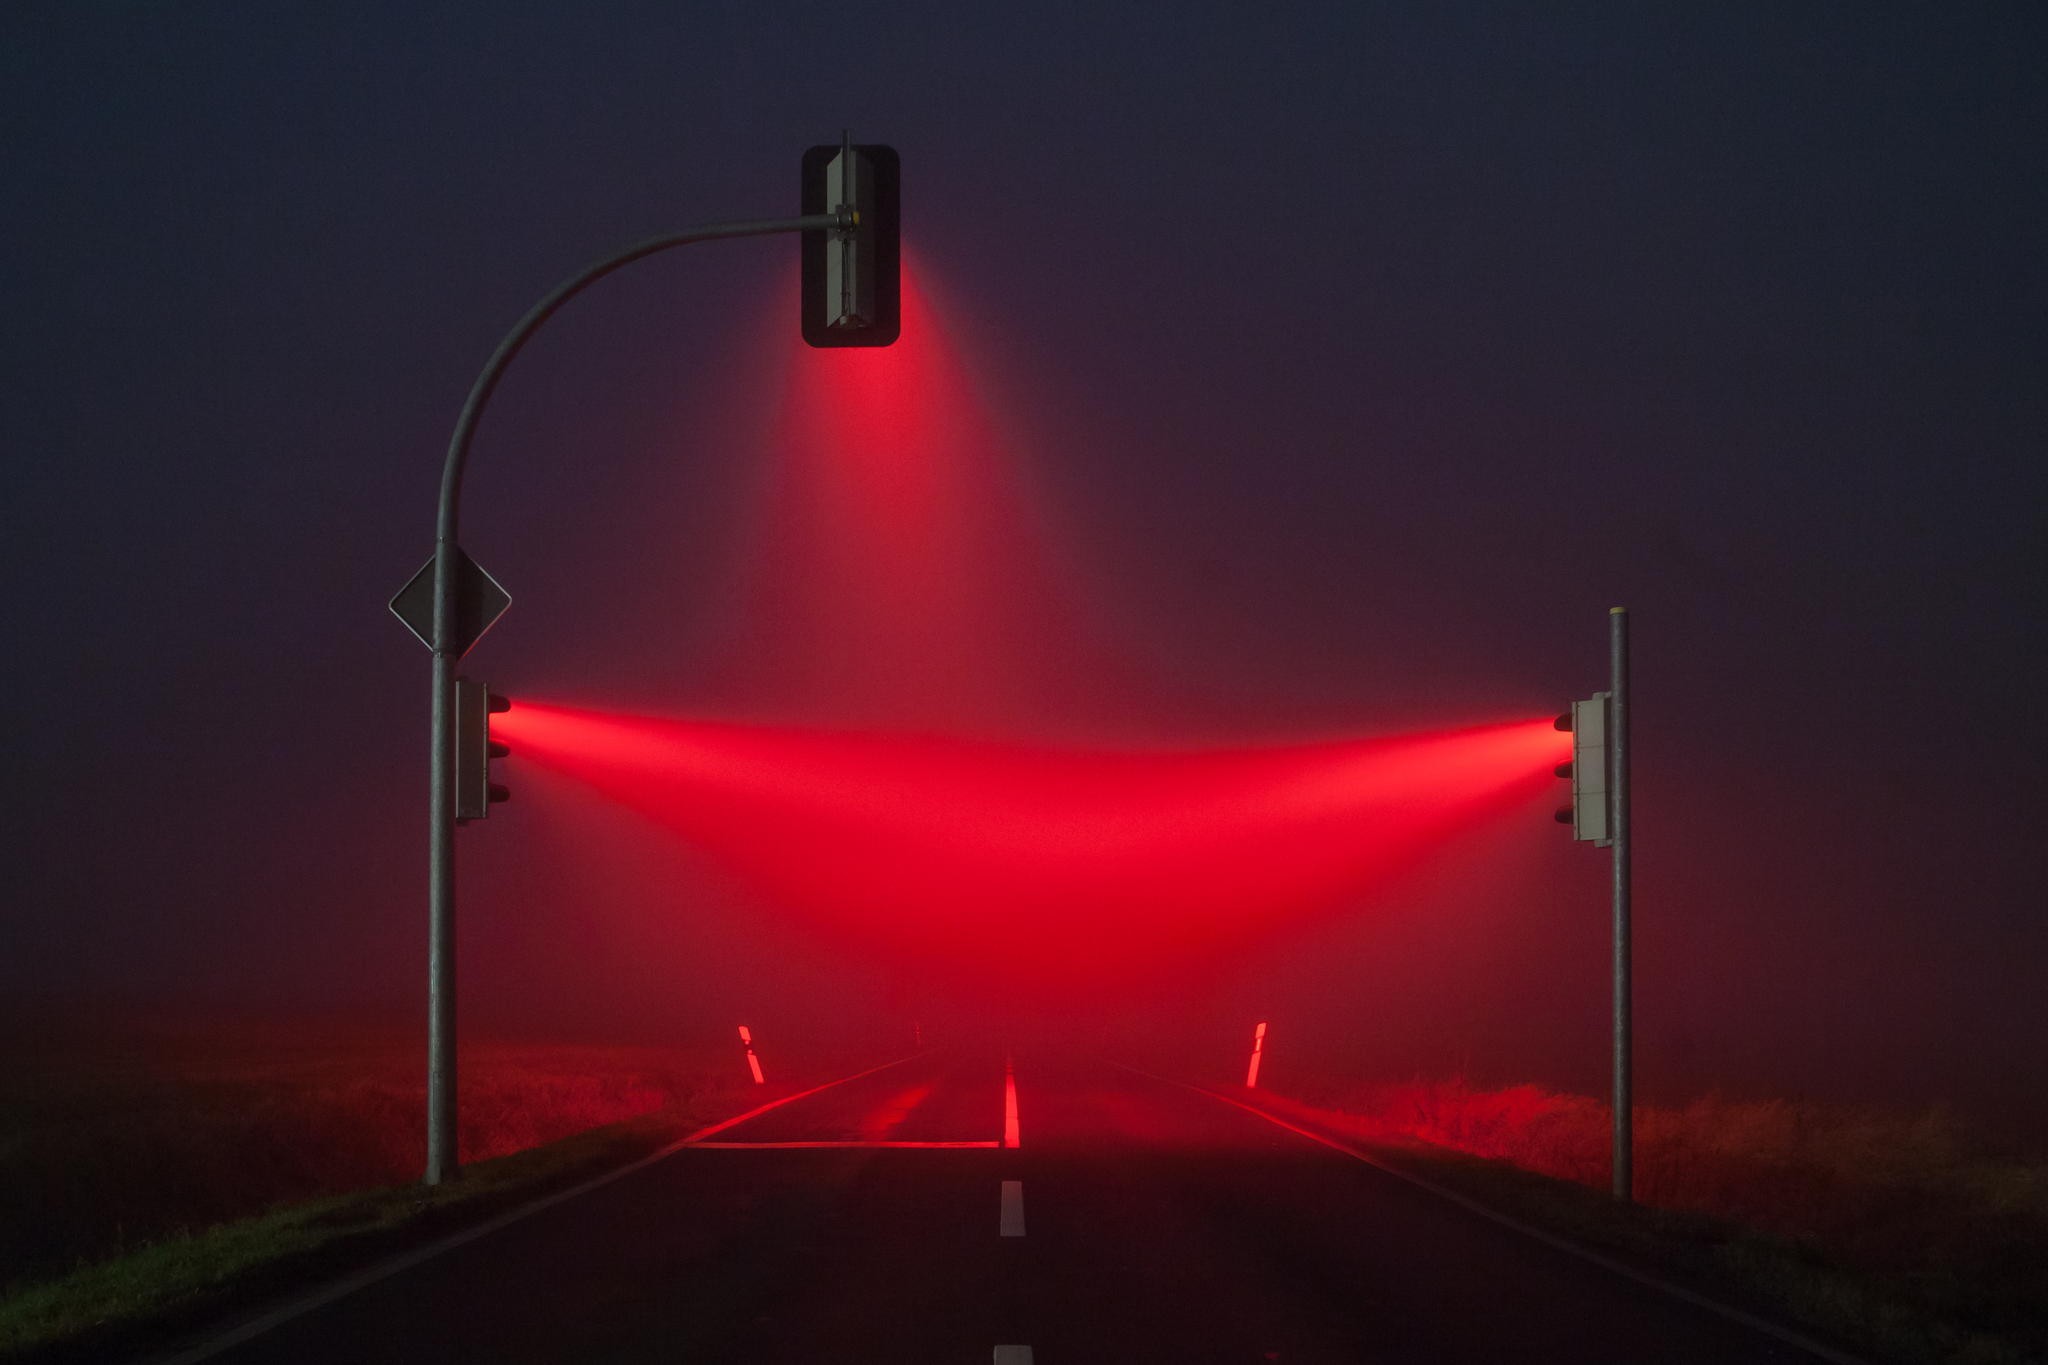 General 2048x1365 traffic lights lights mist red blue road night red light